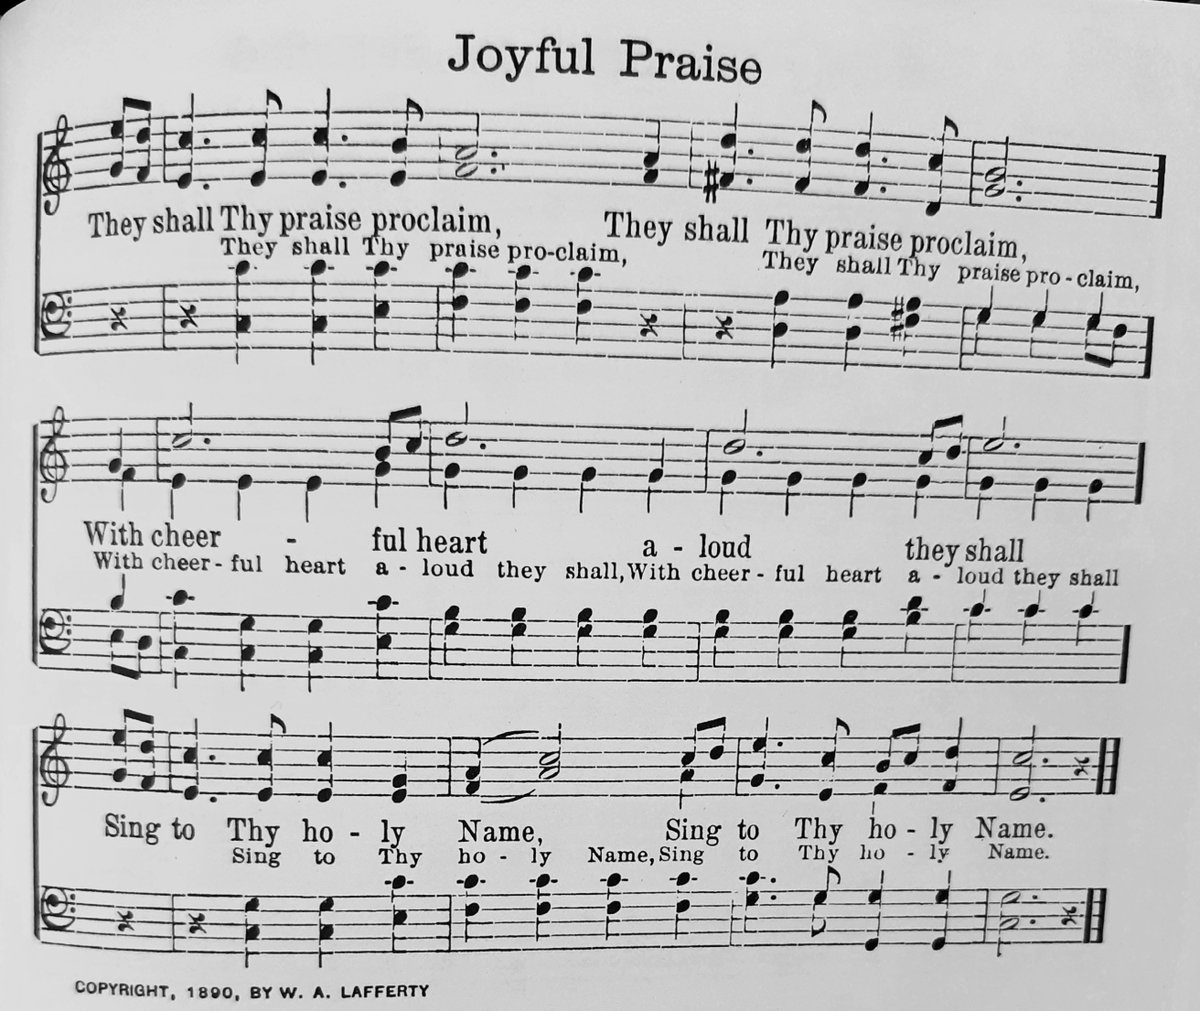 Singing one of my favorite Bible Songs (Psalm 66) this Lord's Day #JoyfulPraise #SevenintheBack